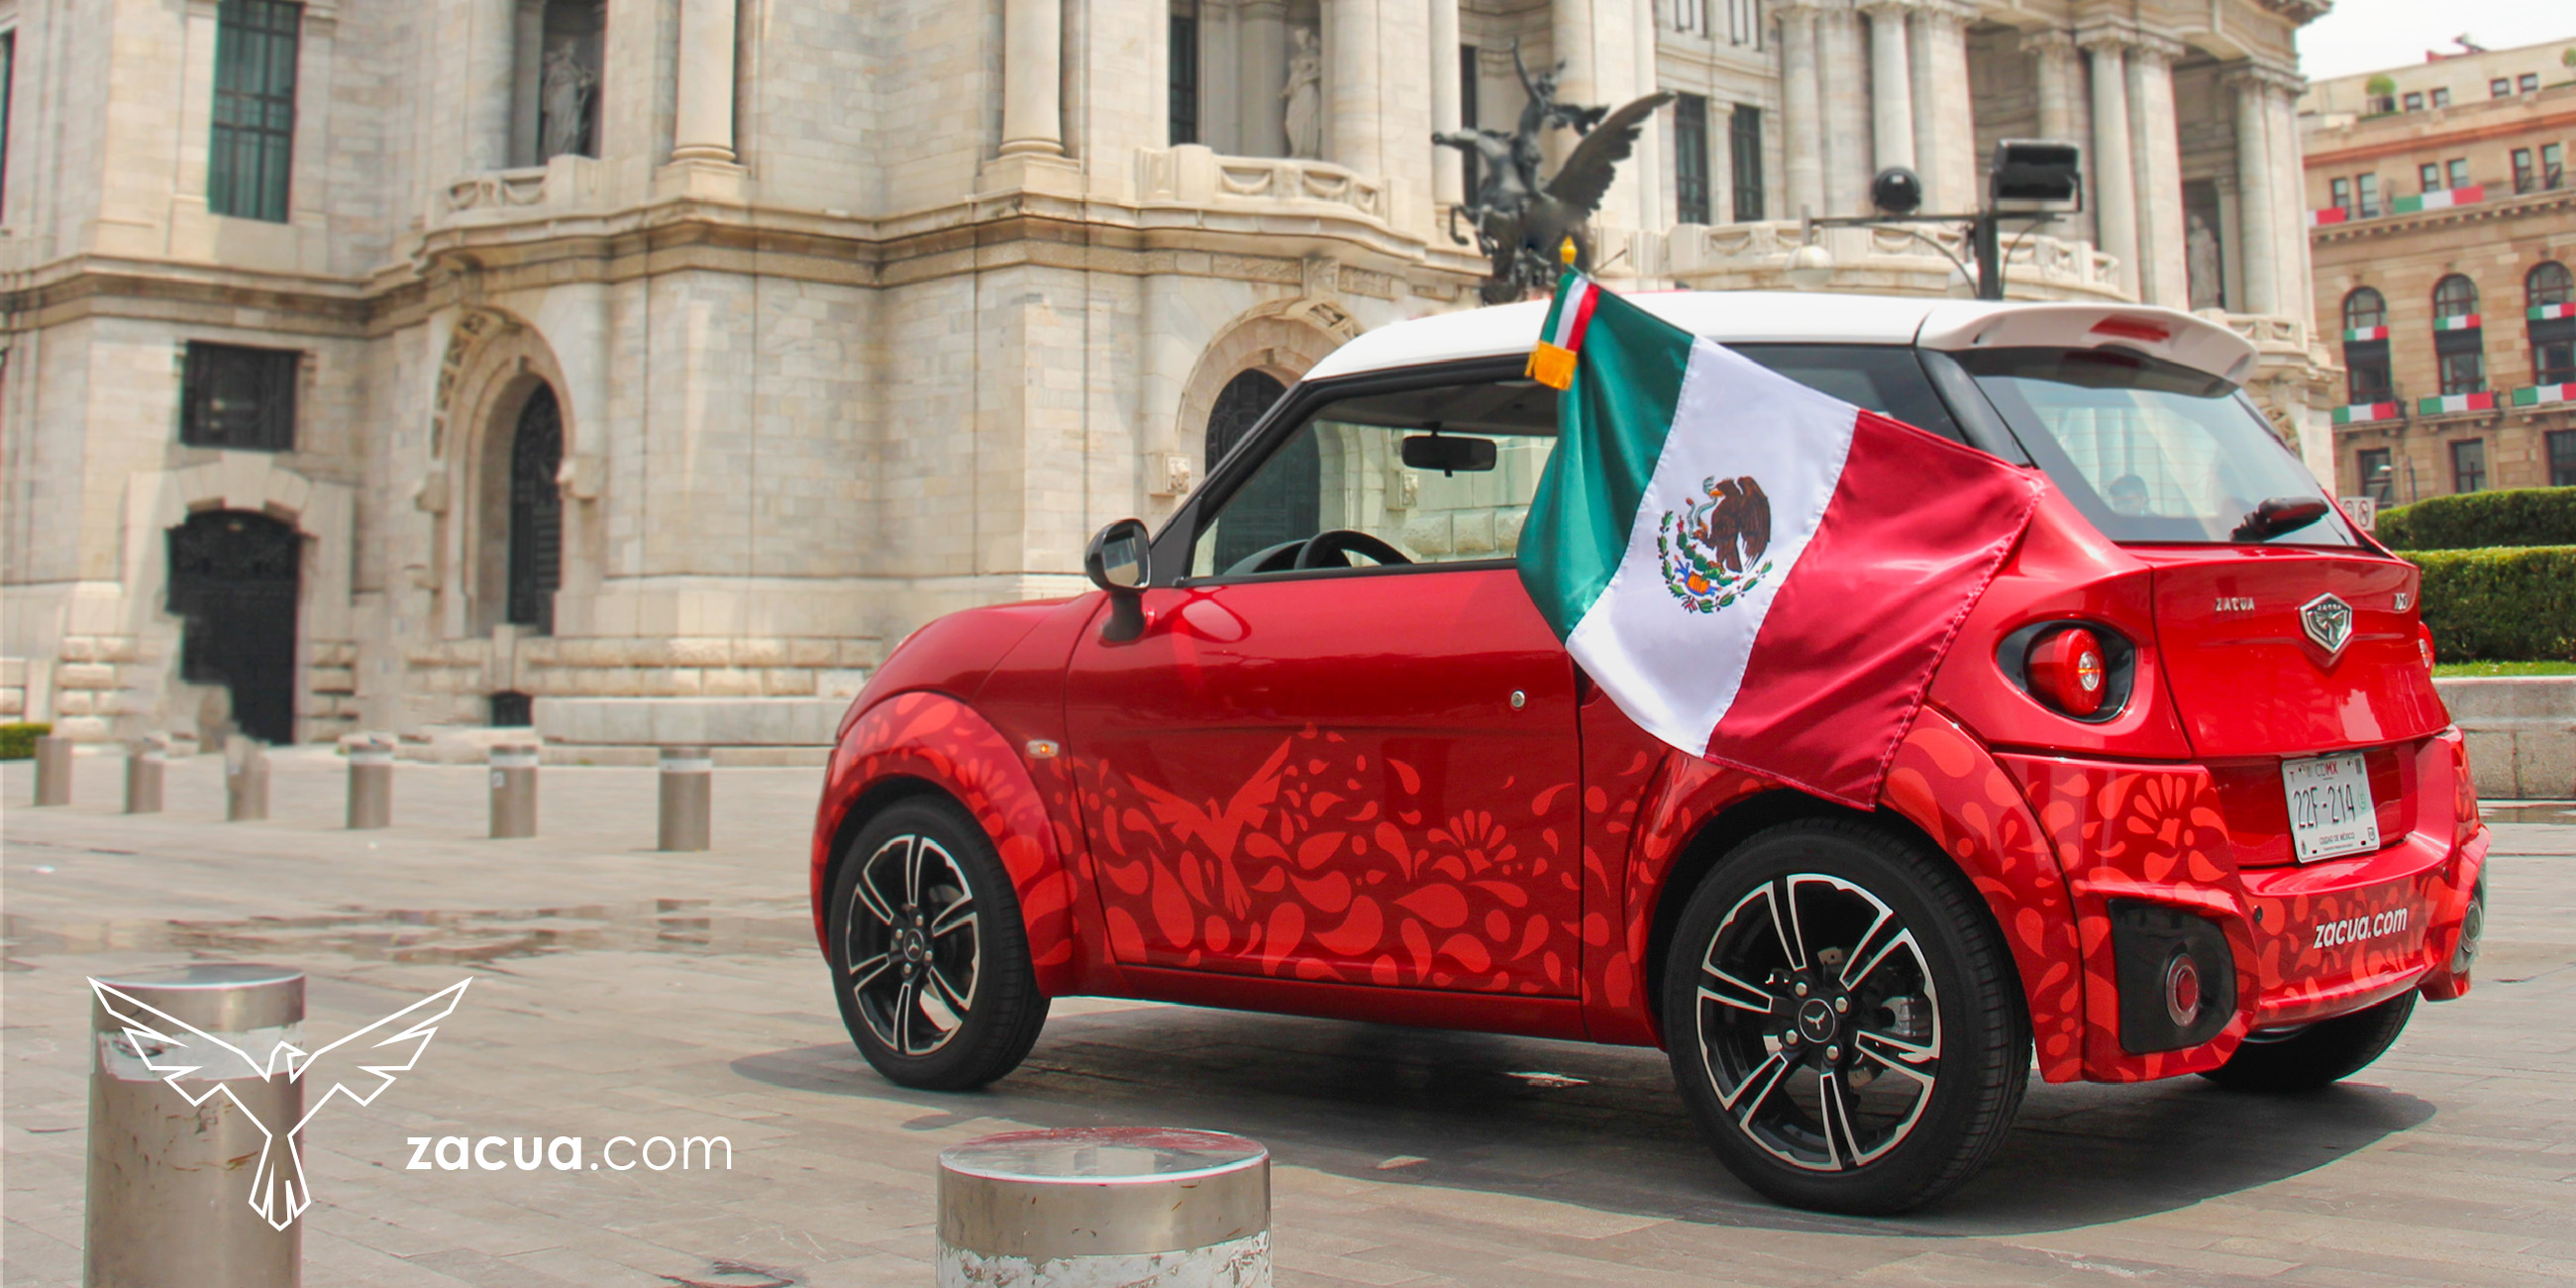 Zacua electric car made in Mexico.  (Photo: Twitter Zacua)